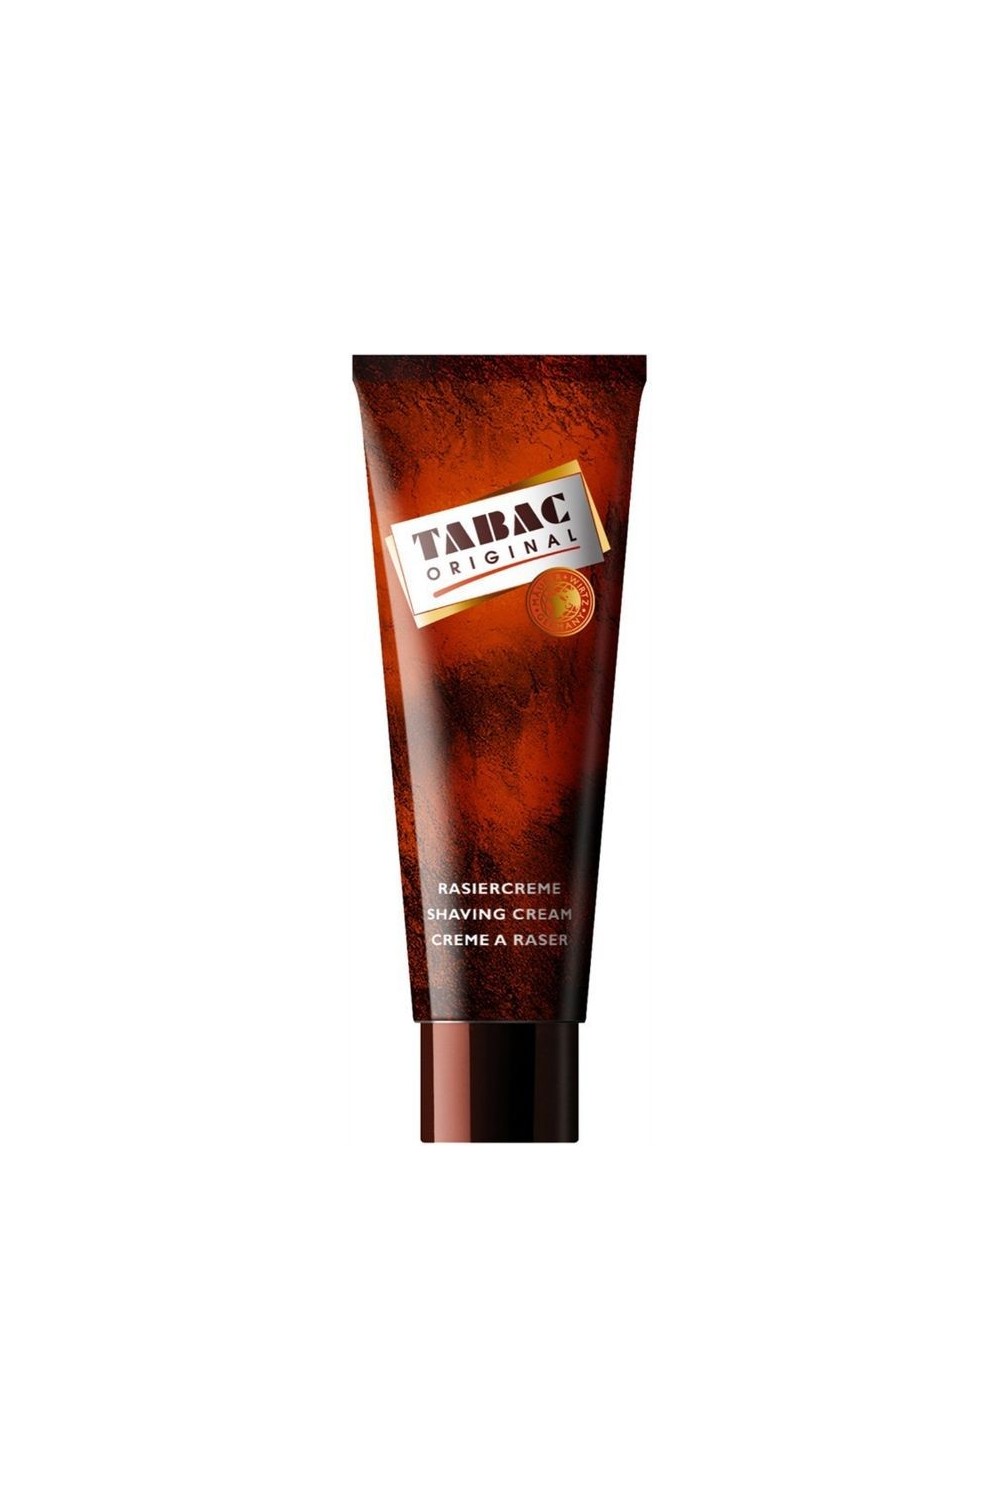 TABAC ORIGINAL - Maurer and Wirtz Tabac Shaving Cream 100ml